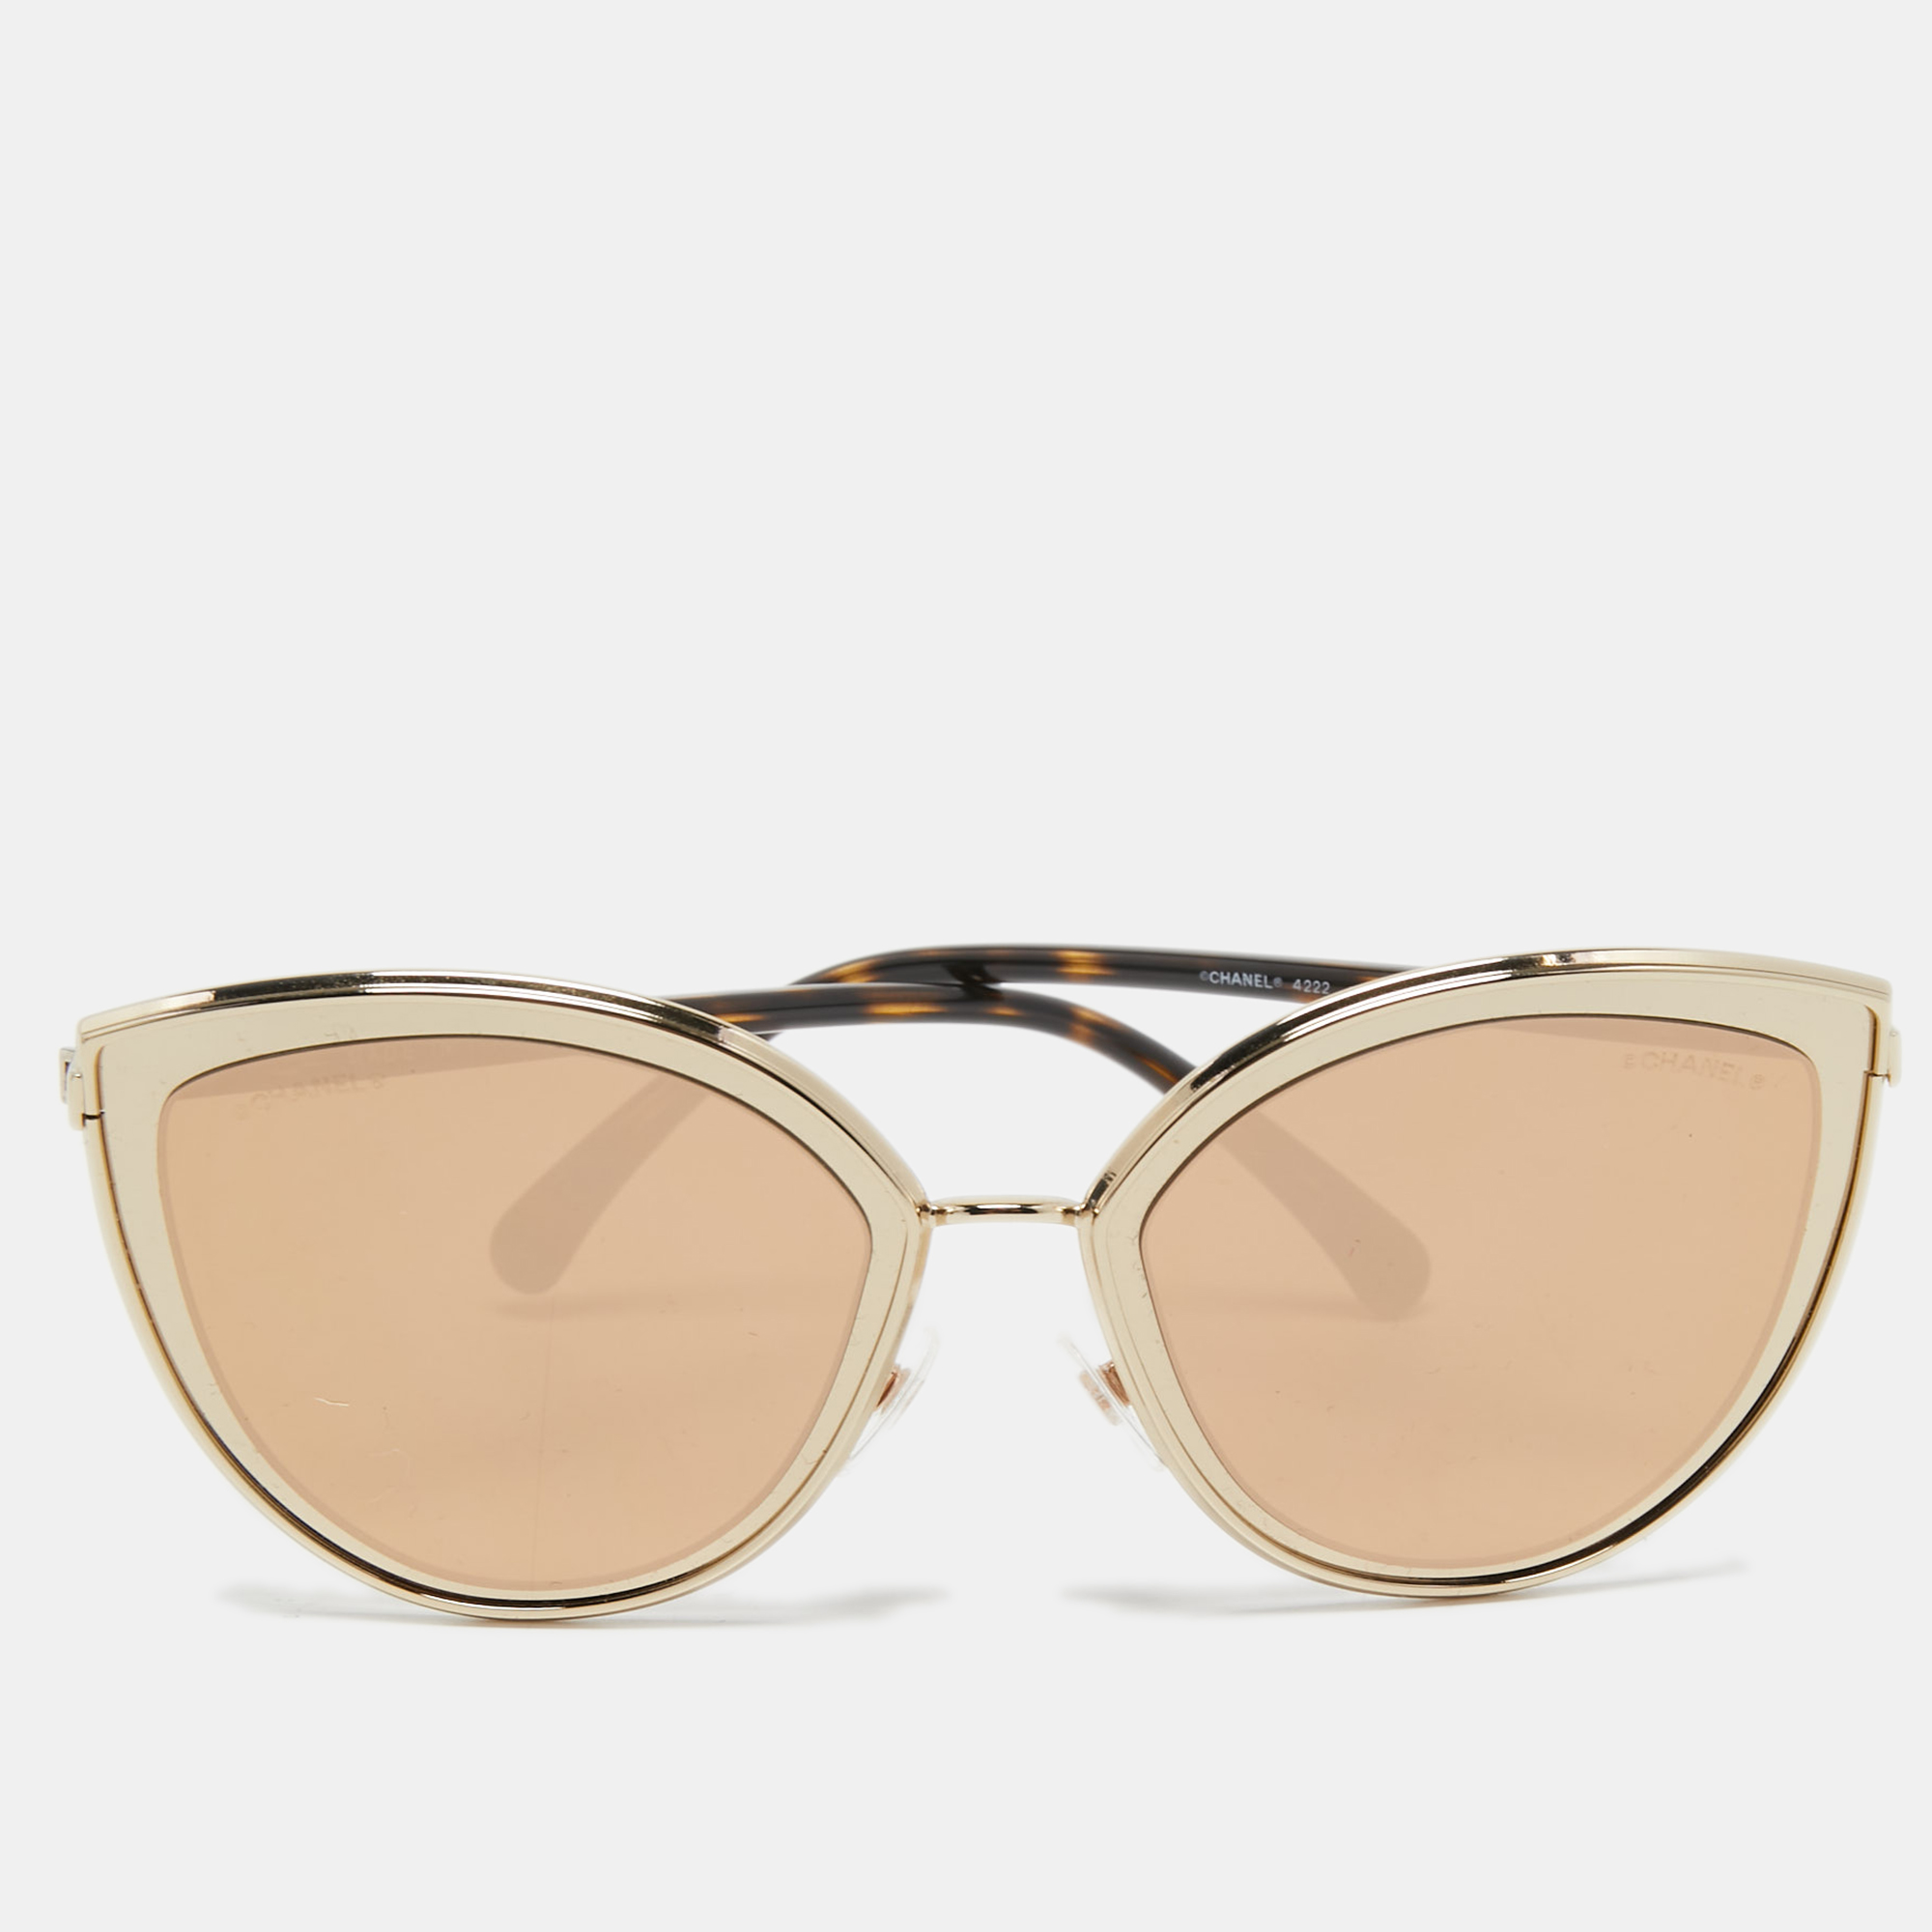 Jessica Simpson Brown/Nude Oversize Square Glam Sunglasses